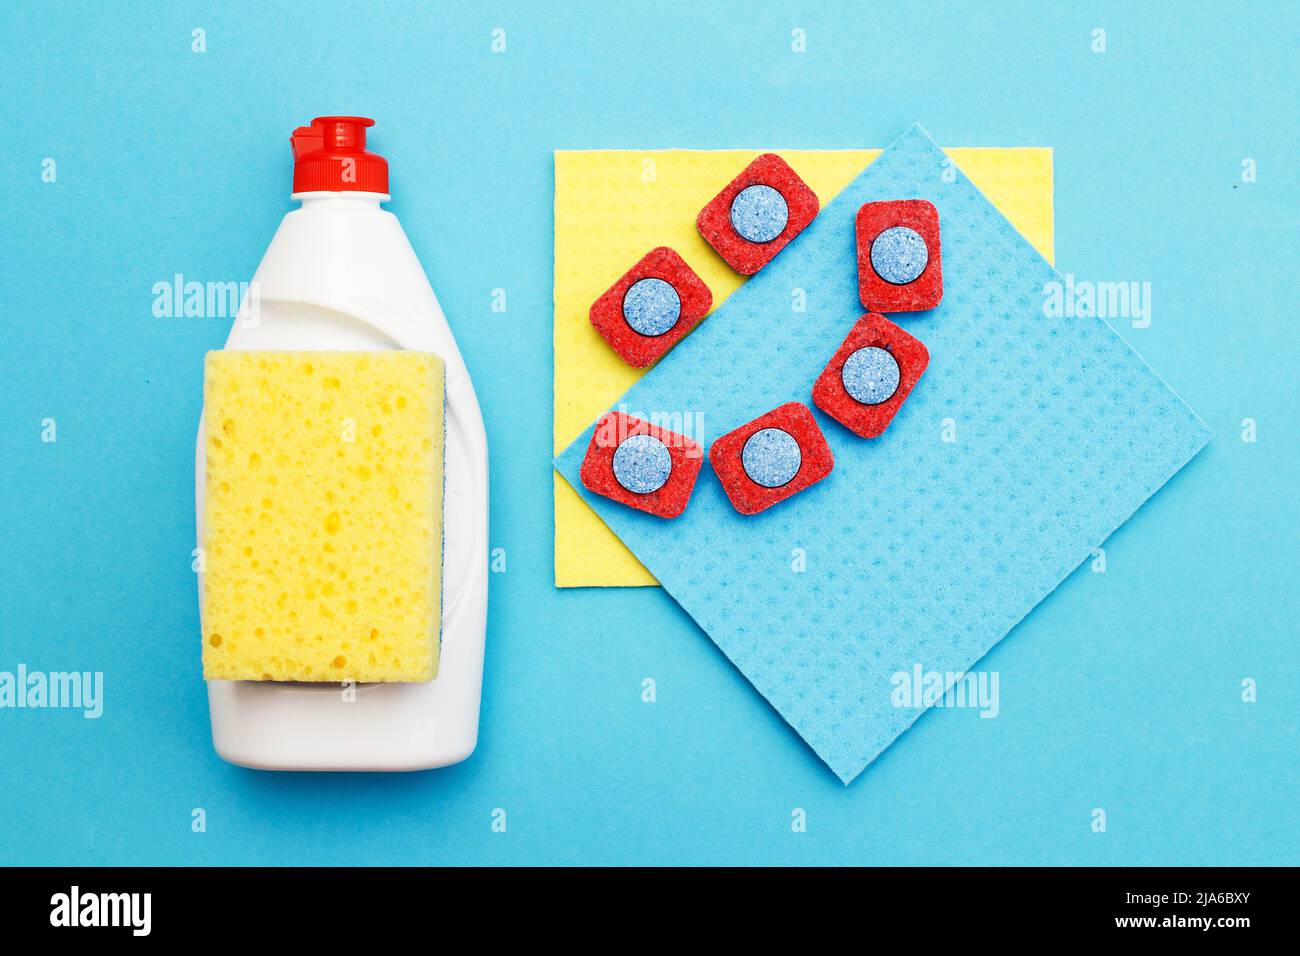 capsules for dishwashers, dishwashing detergents liquid, kitchen rag and sponges on a blue background. flat lay Stock Photo